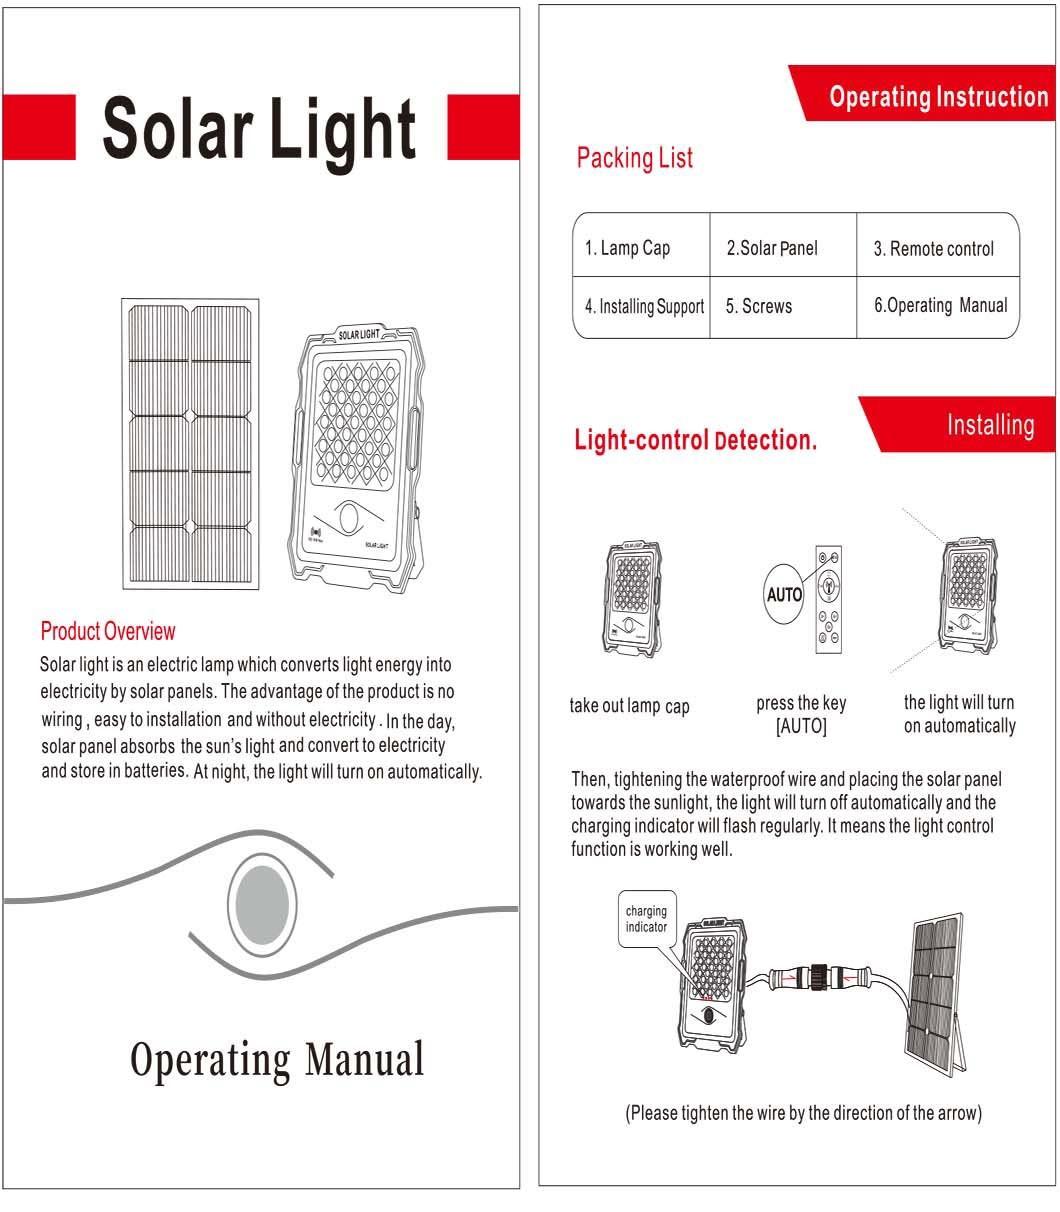 200W Solar Energy Saving LED Lighting IP67 Flood Lamp with Camera